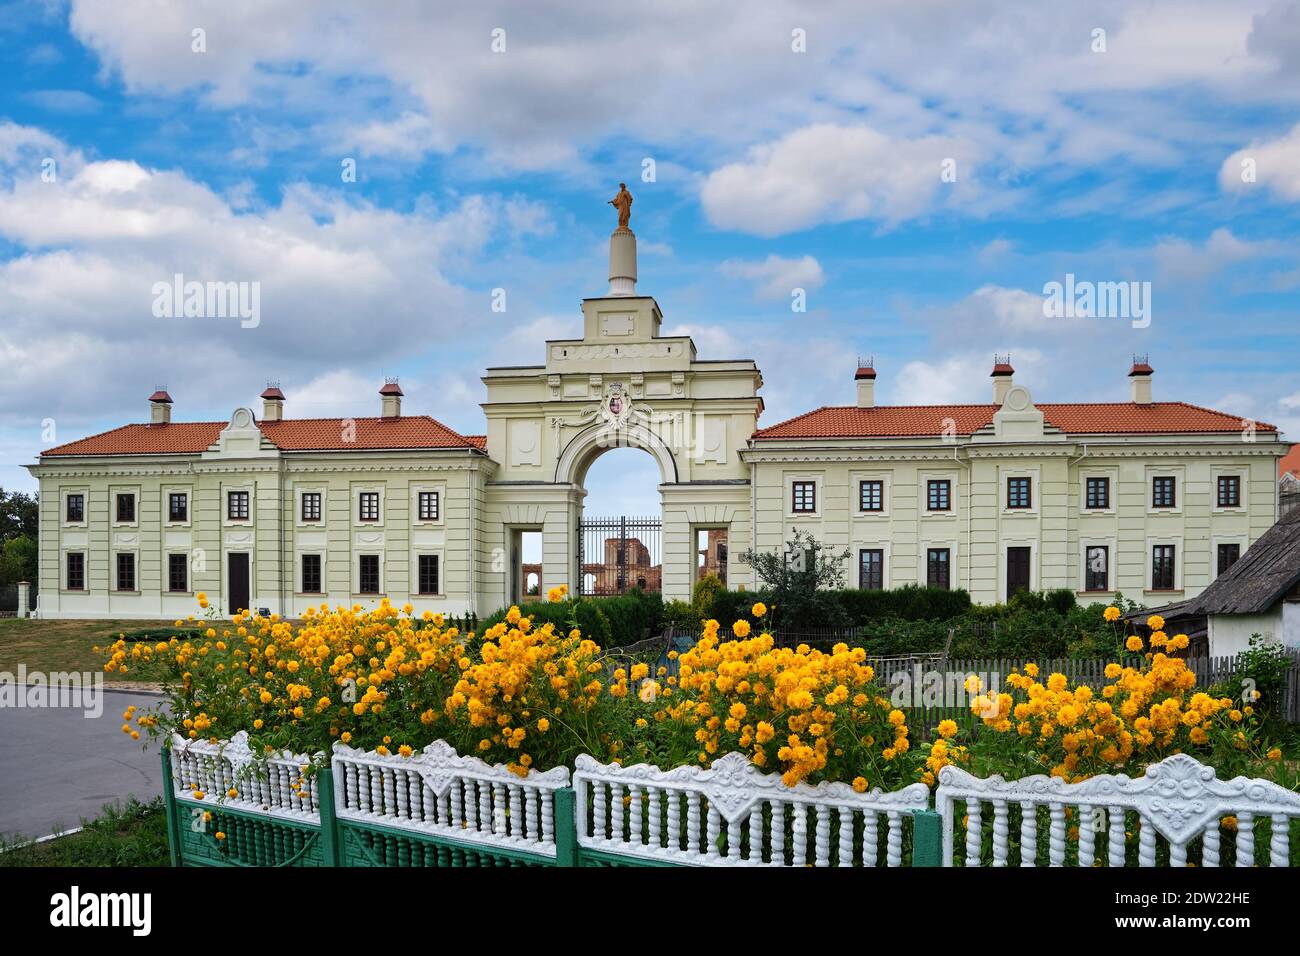 Belorussian tourist attraction - Palace in Ruzhany village, Brest region, Belarus Stock Photo